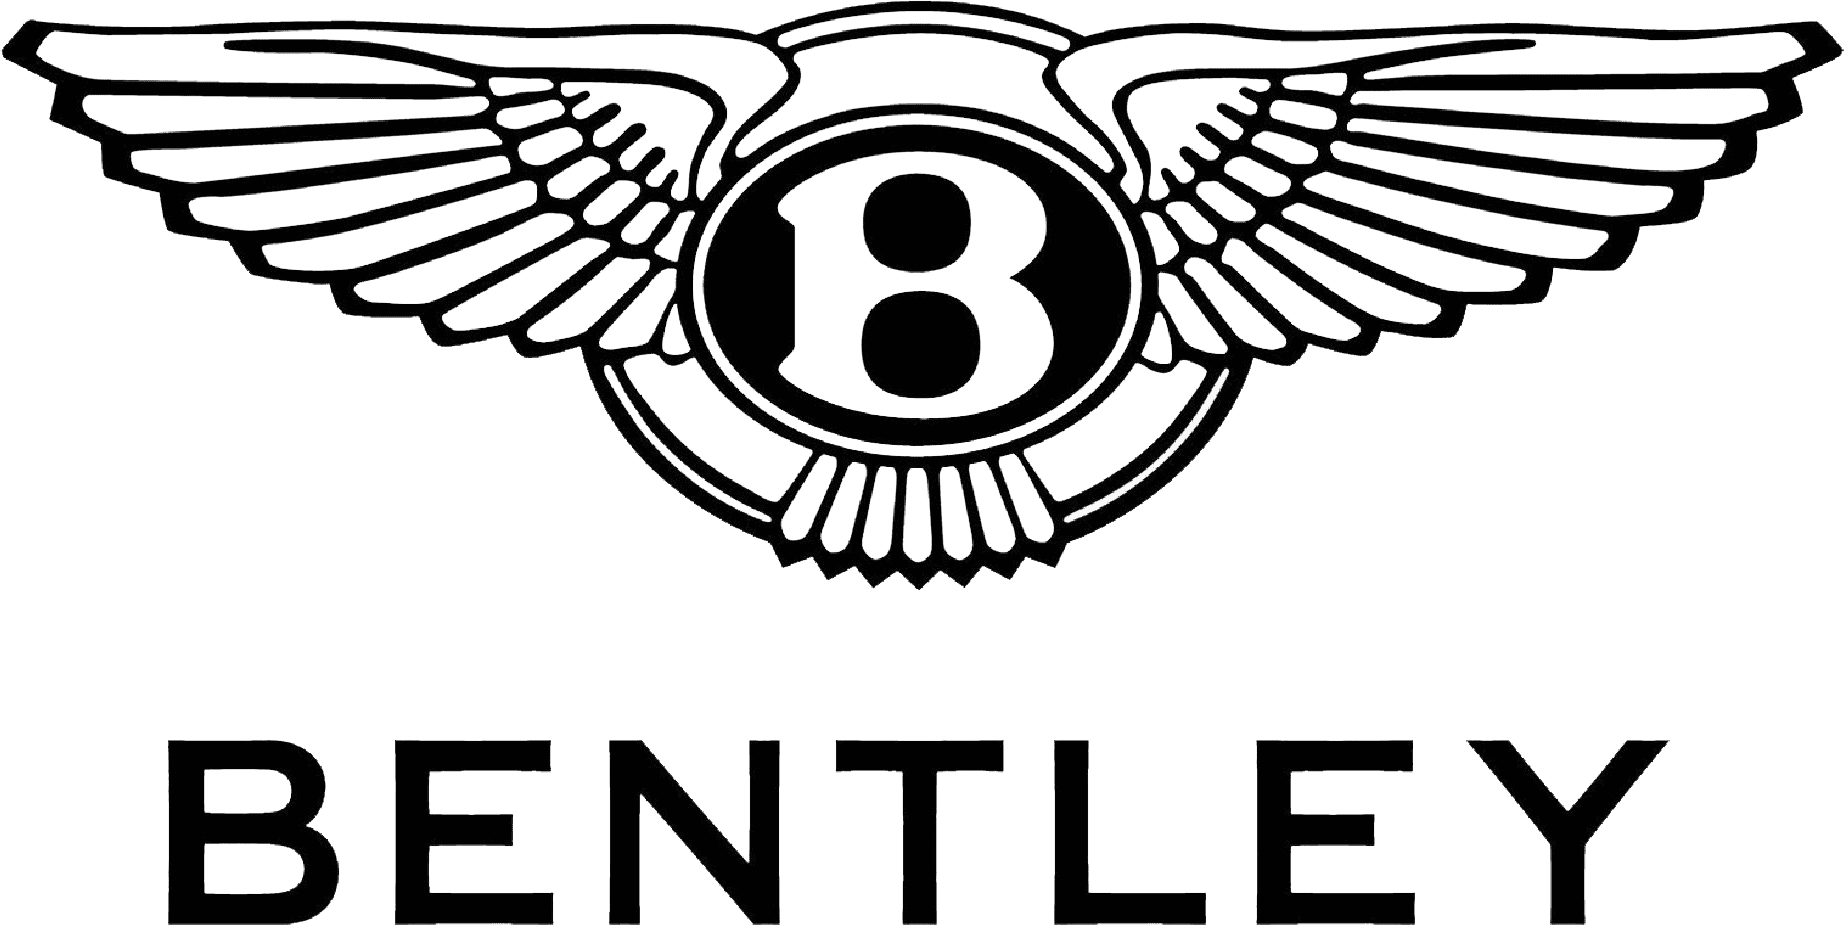 Bentley manufacturer logo